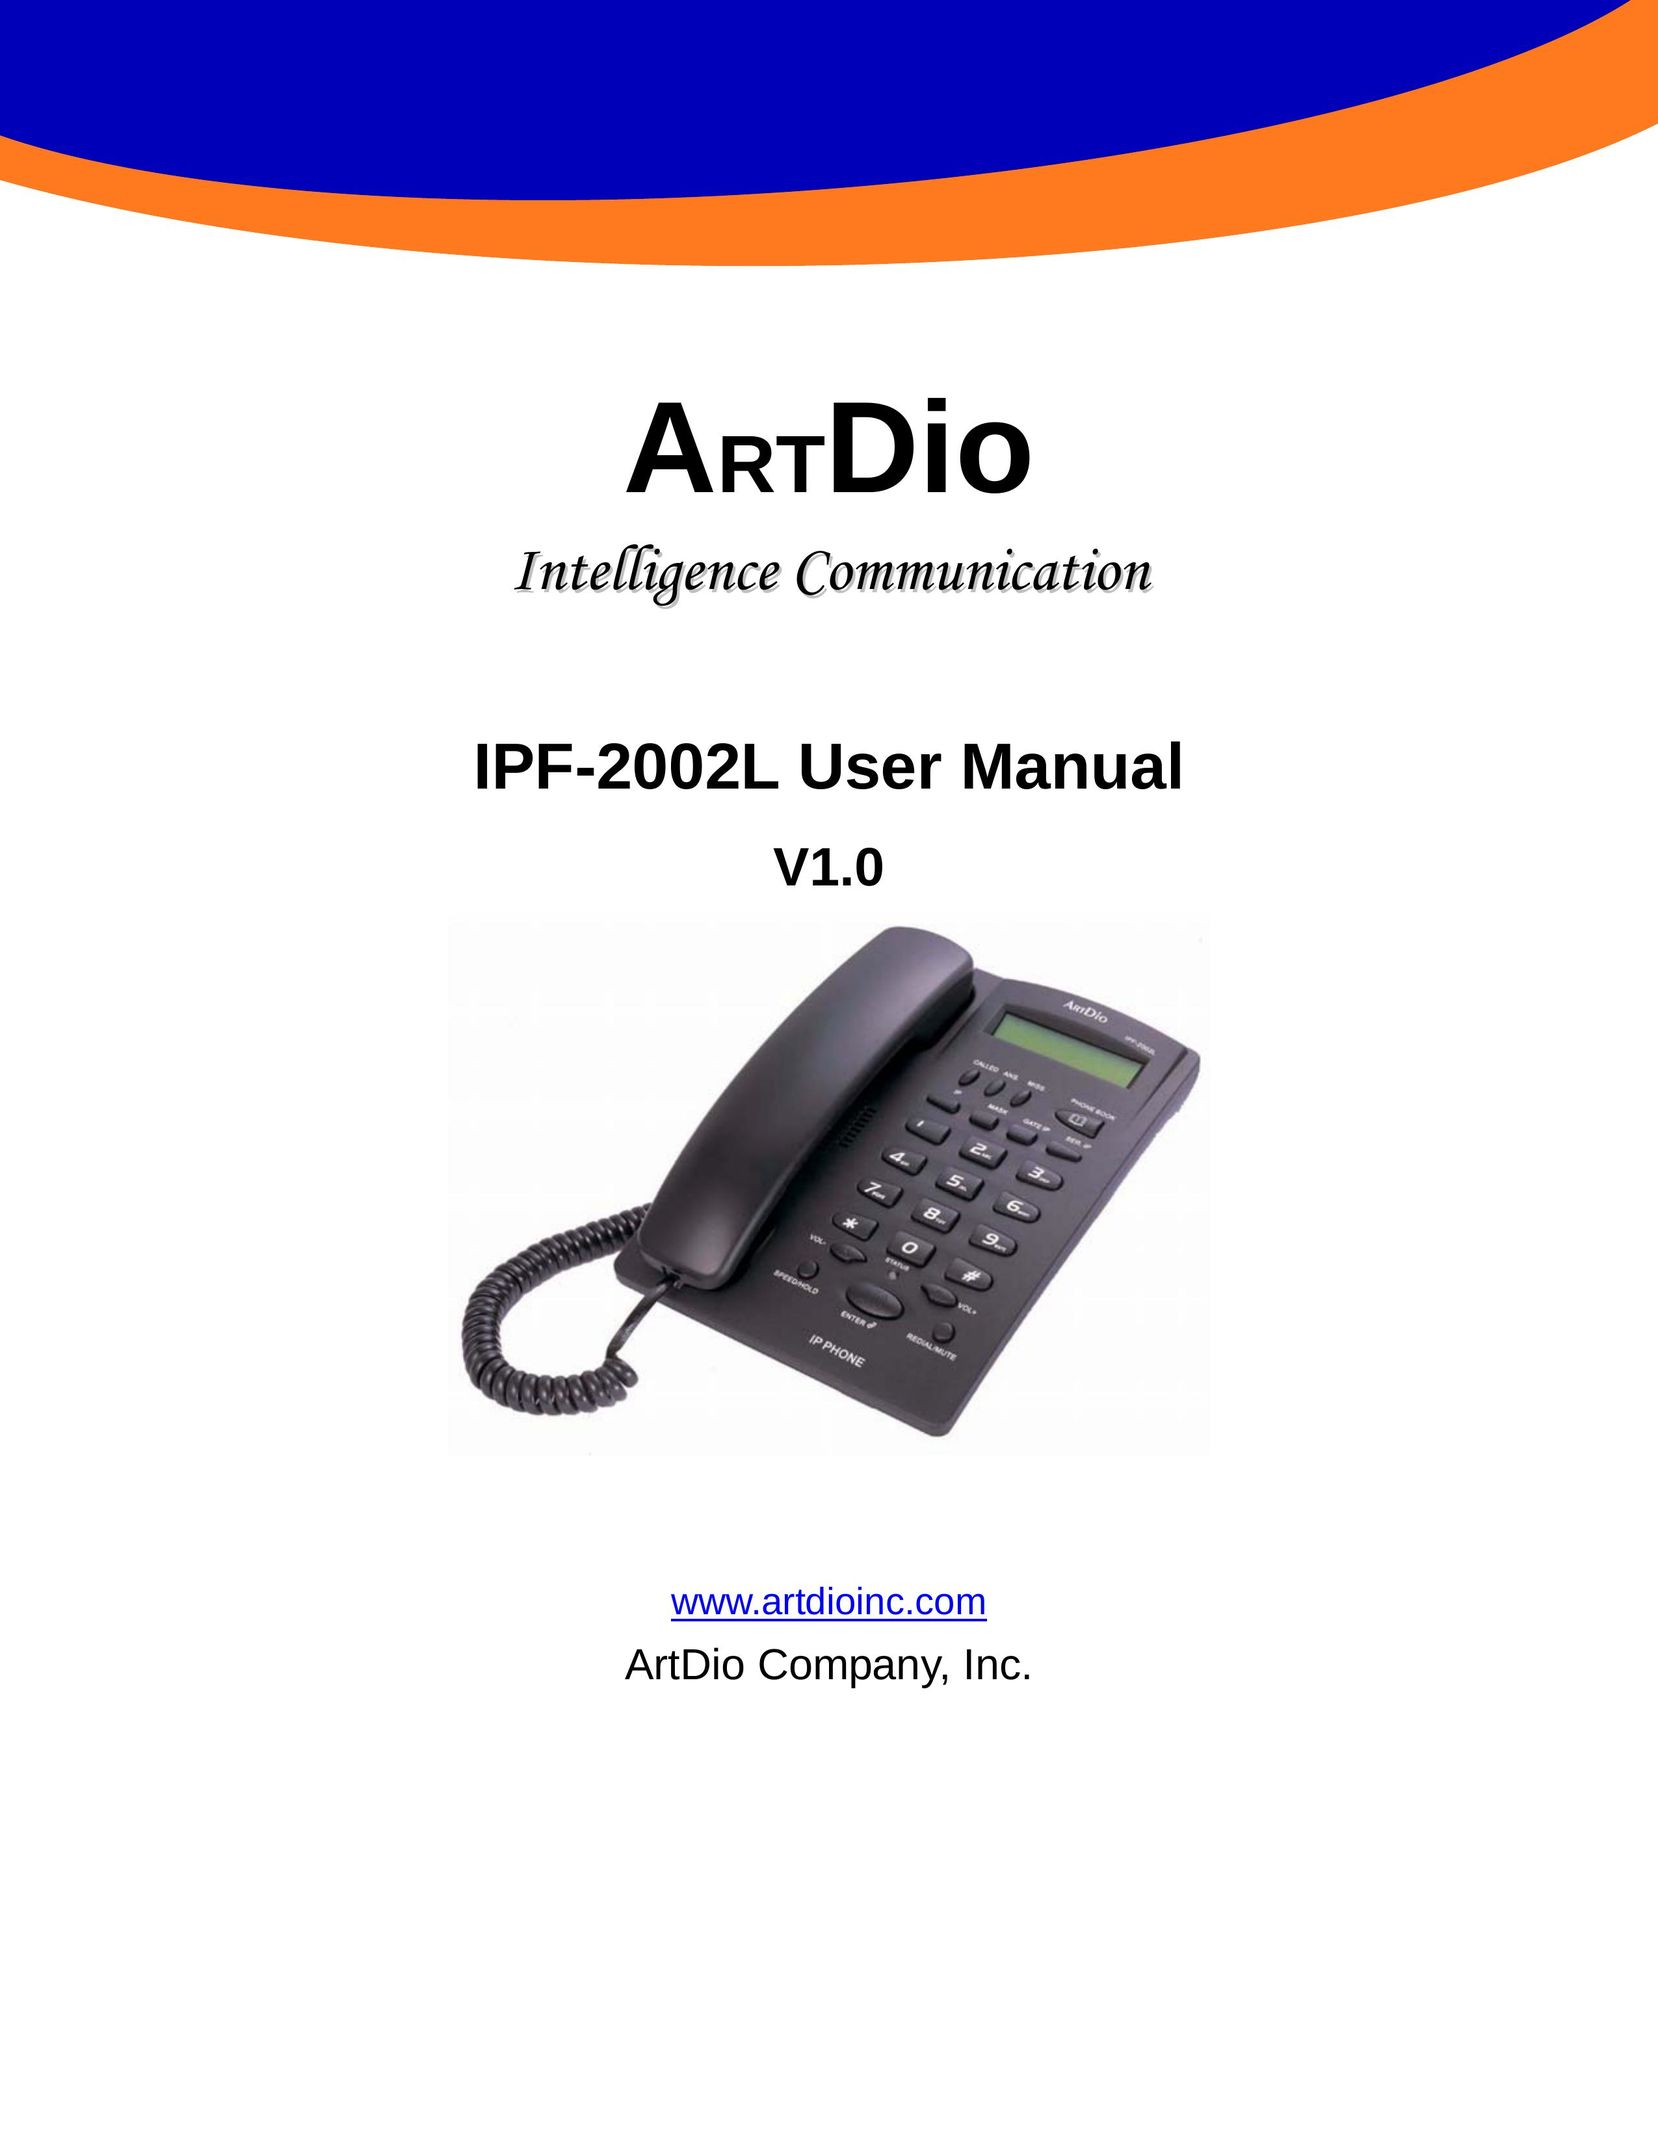 ArtDio IPF-2000L Telephone User Manual